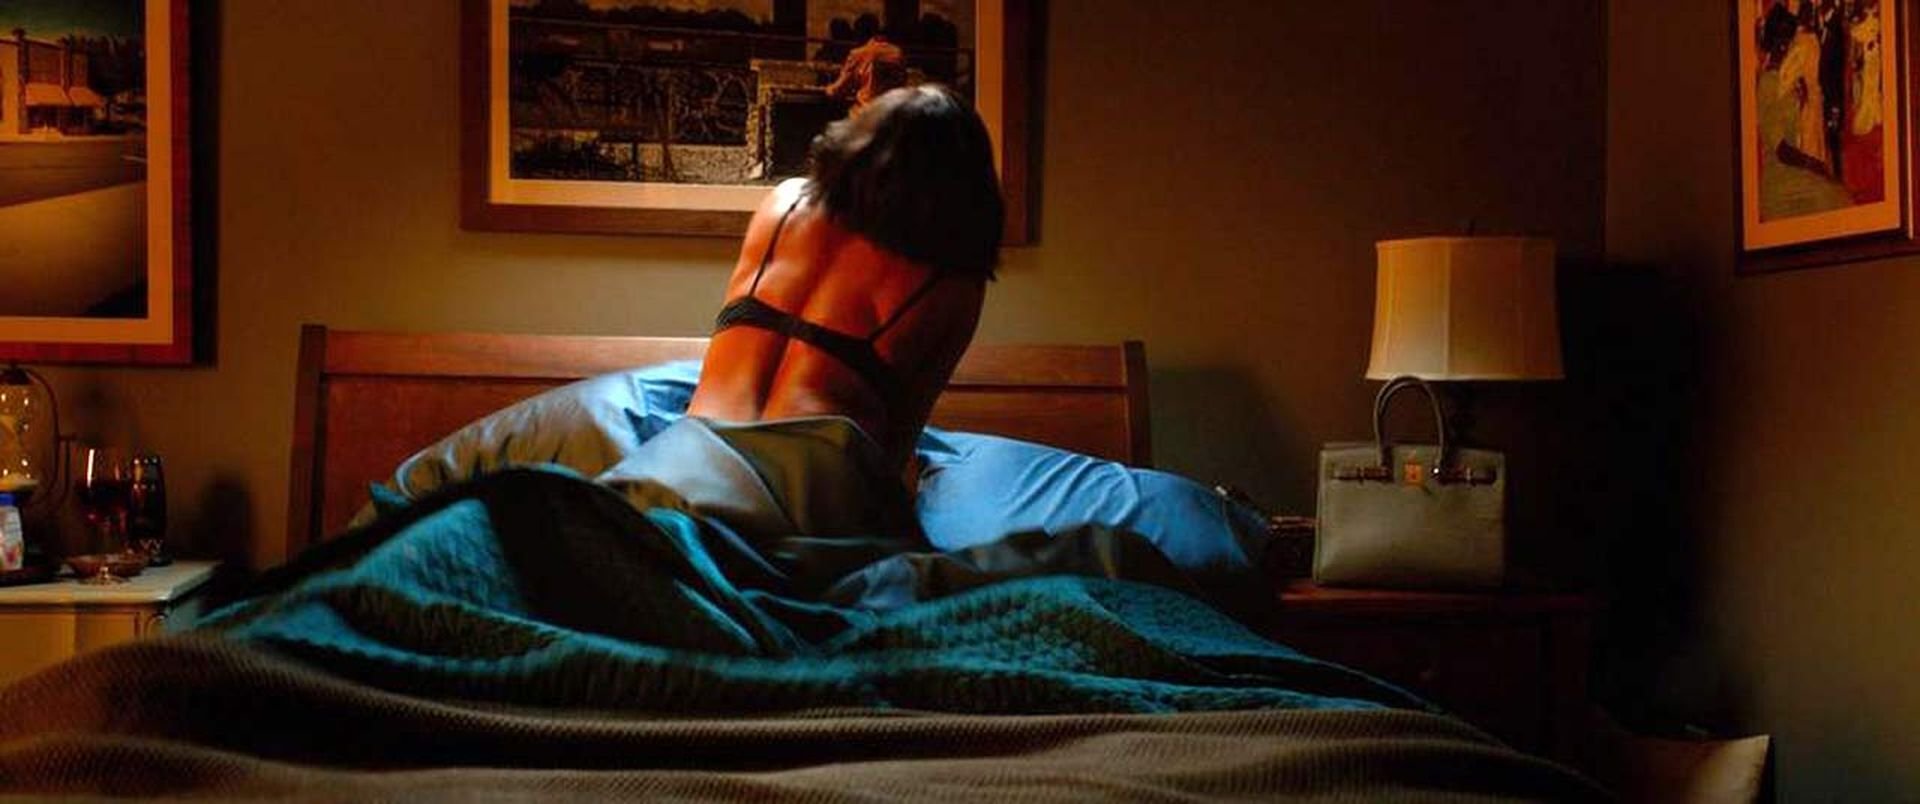 Taraji P. Henson Nude  - What Men Want (8 Pics + GIFs & Video)